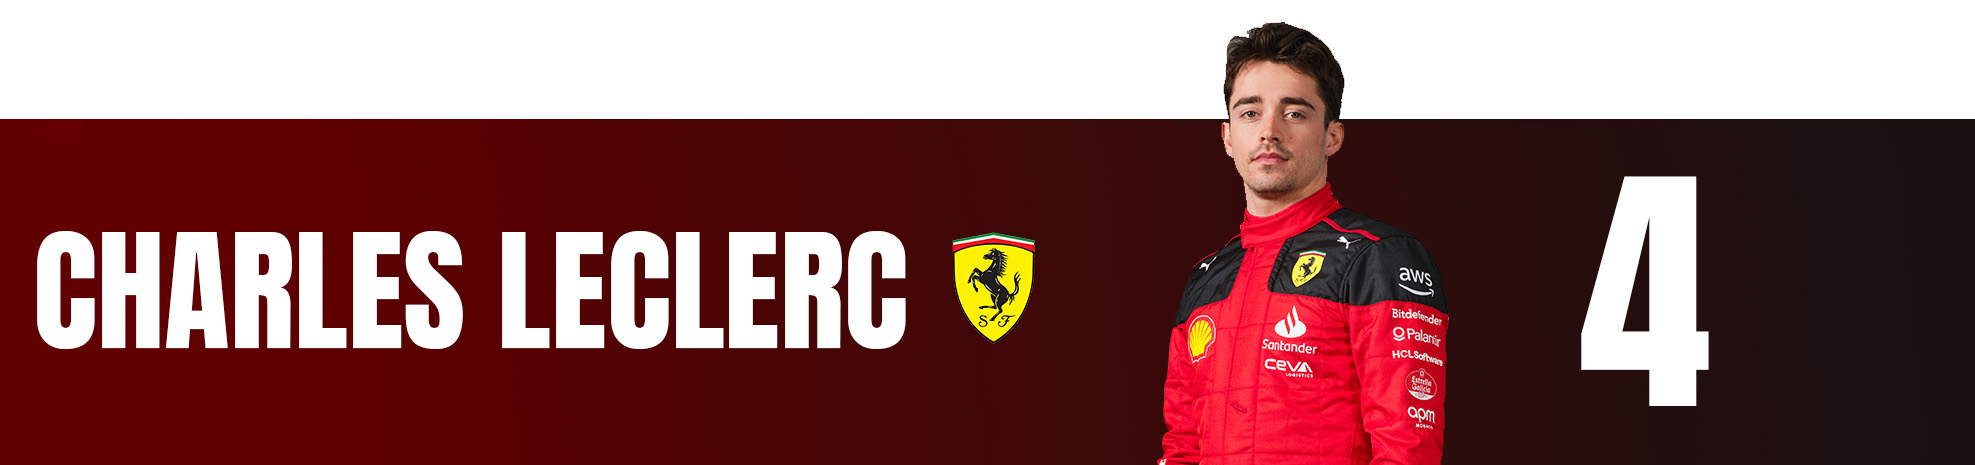 Charles Leclerc F1 Monaco GP ranking